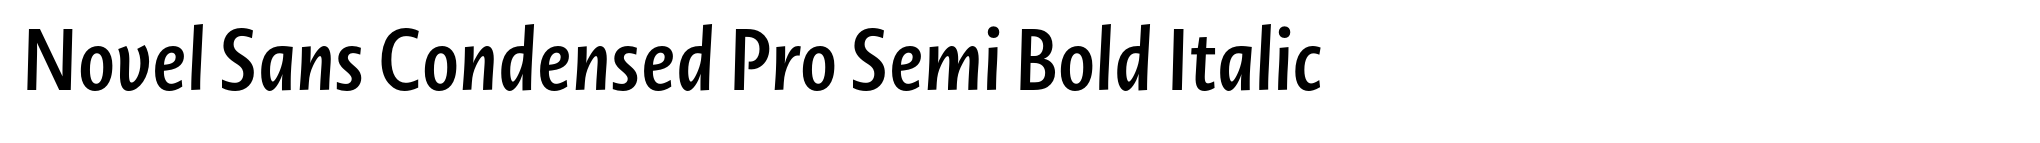 Novel Sans Condensed Pro Semi Bold Italic image